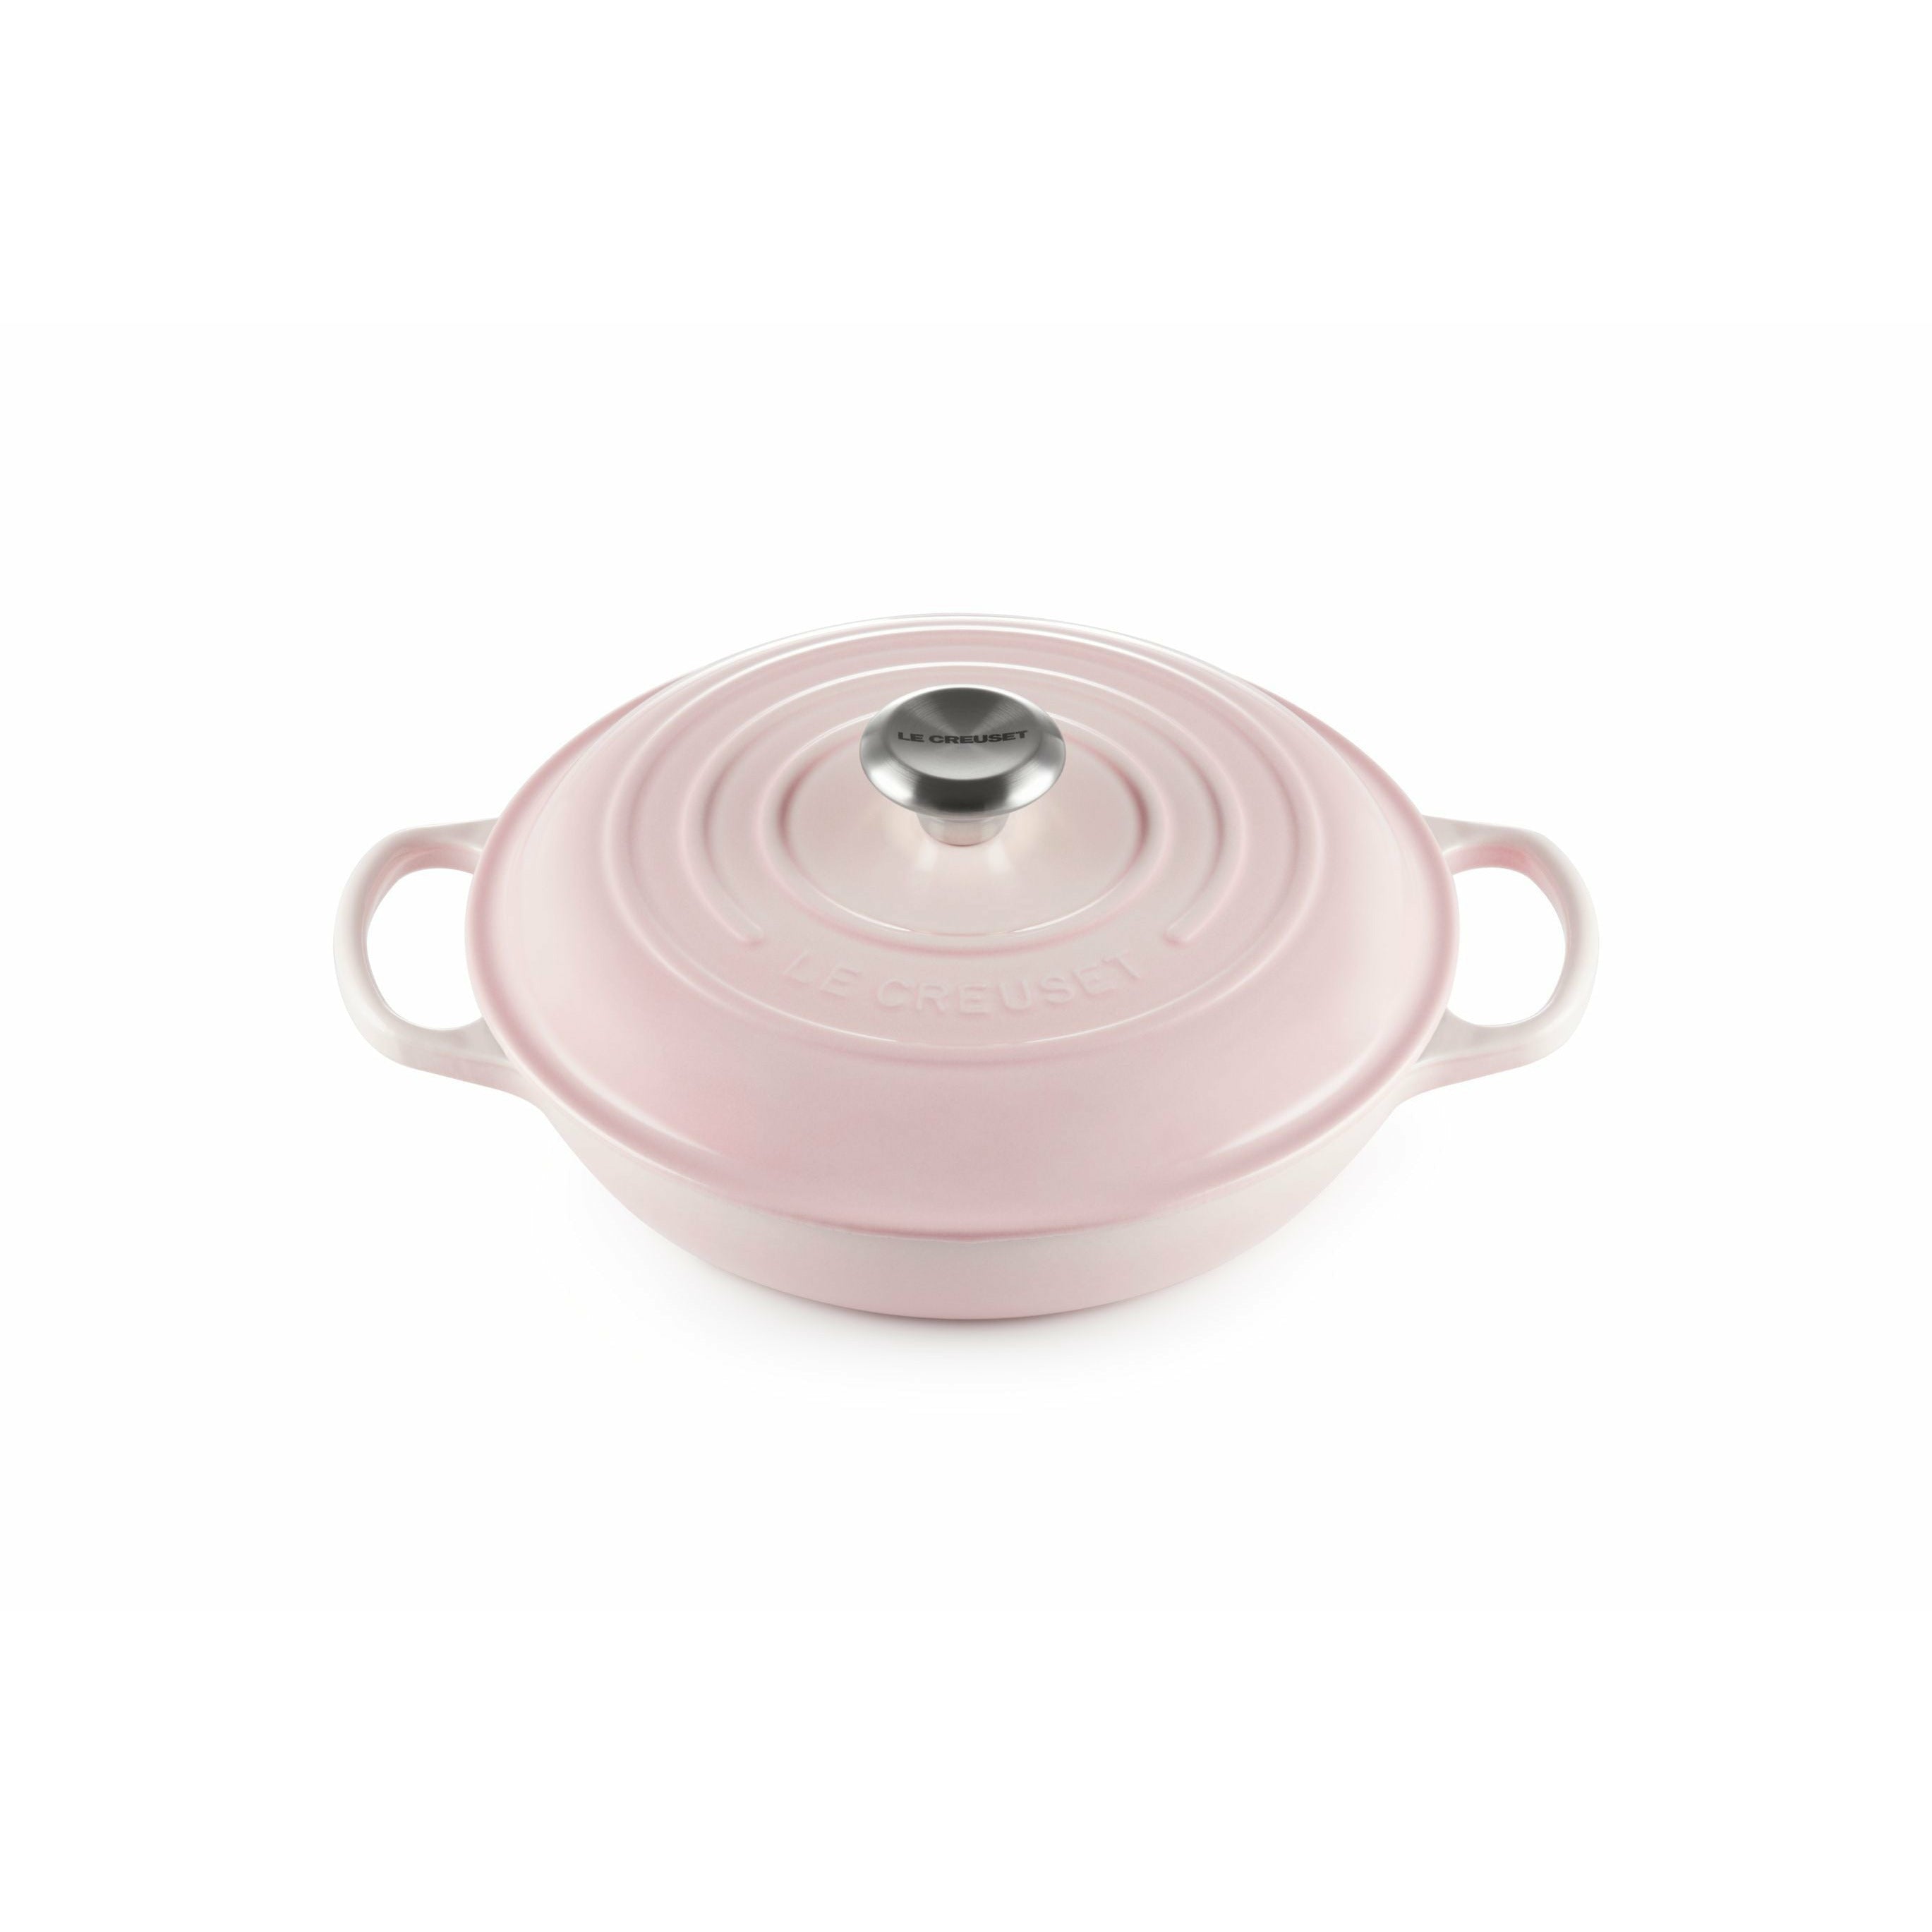 Le Creuset Signature Gourmet Professional Pot 26 Cm, Shell Pink